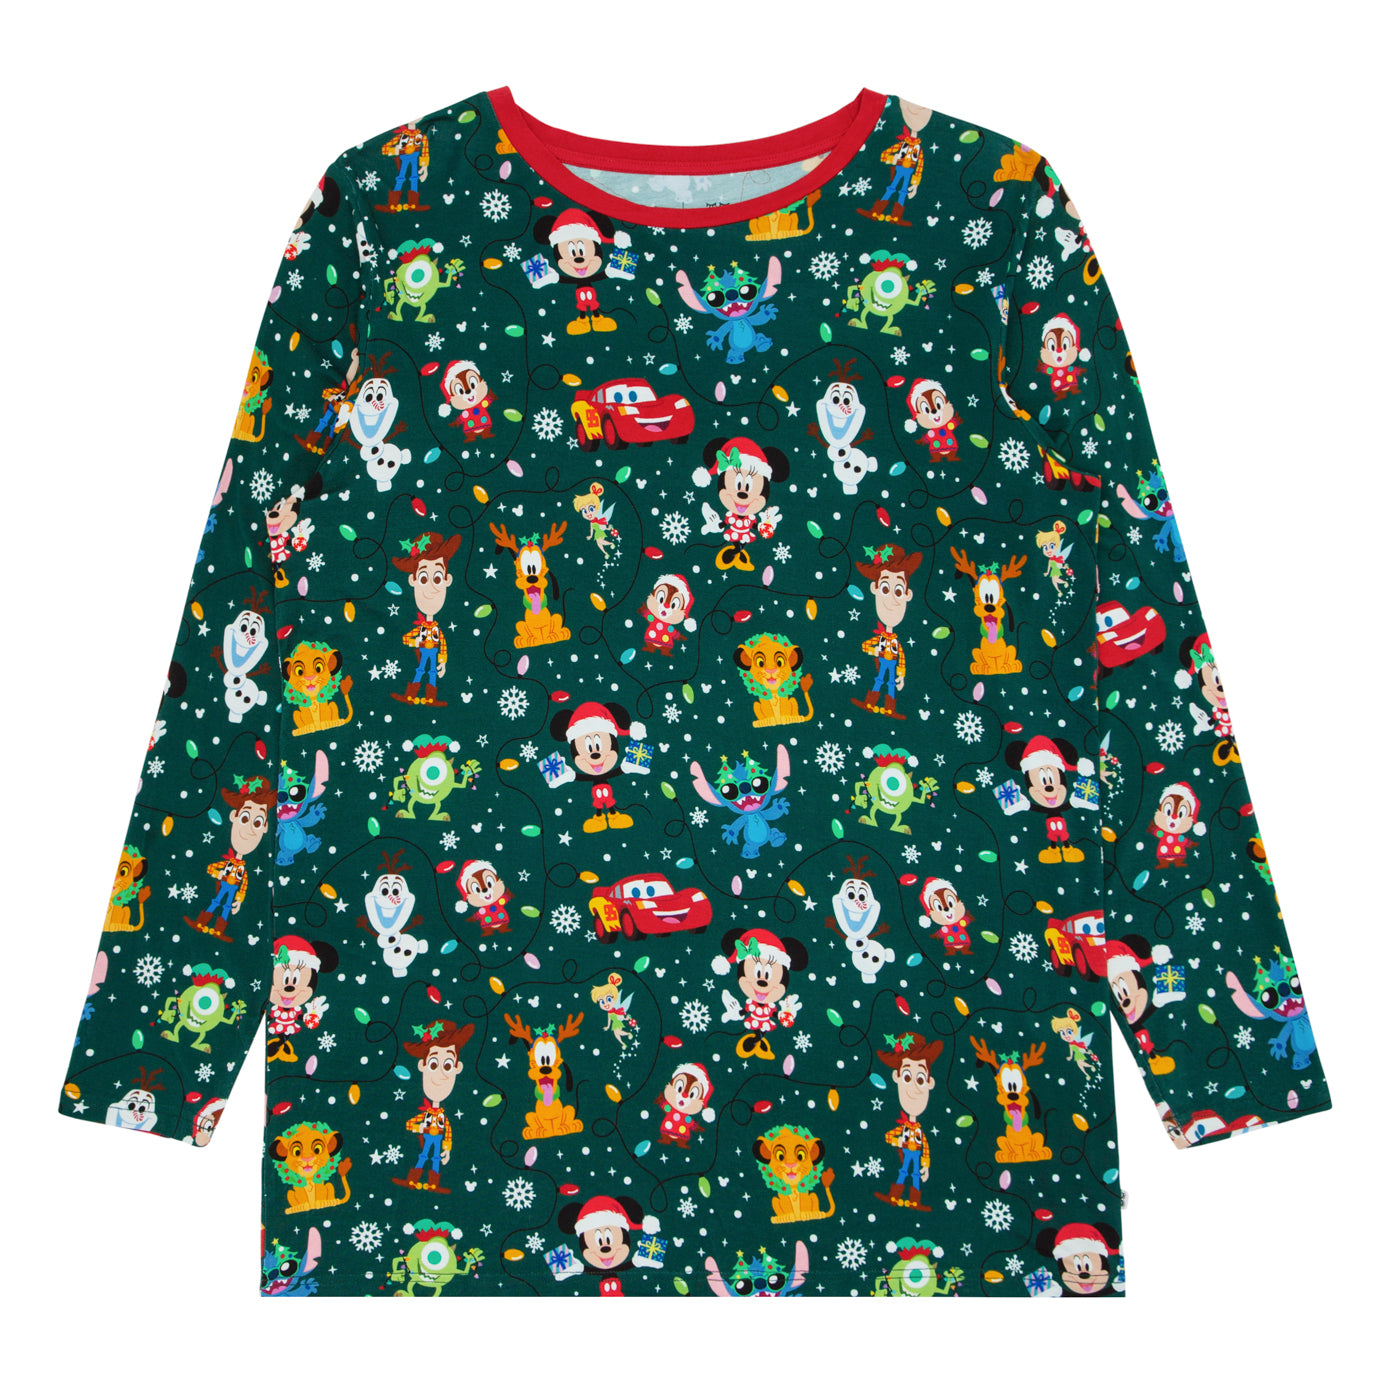 Flat lay image of a Disney Christmas Party men's pajama top